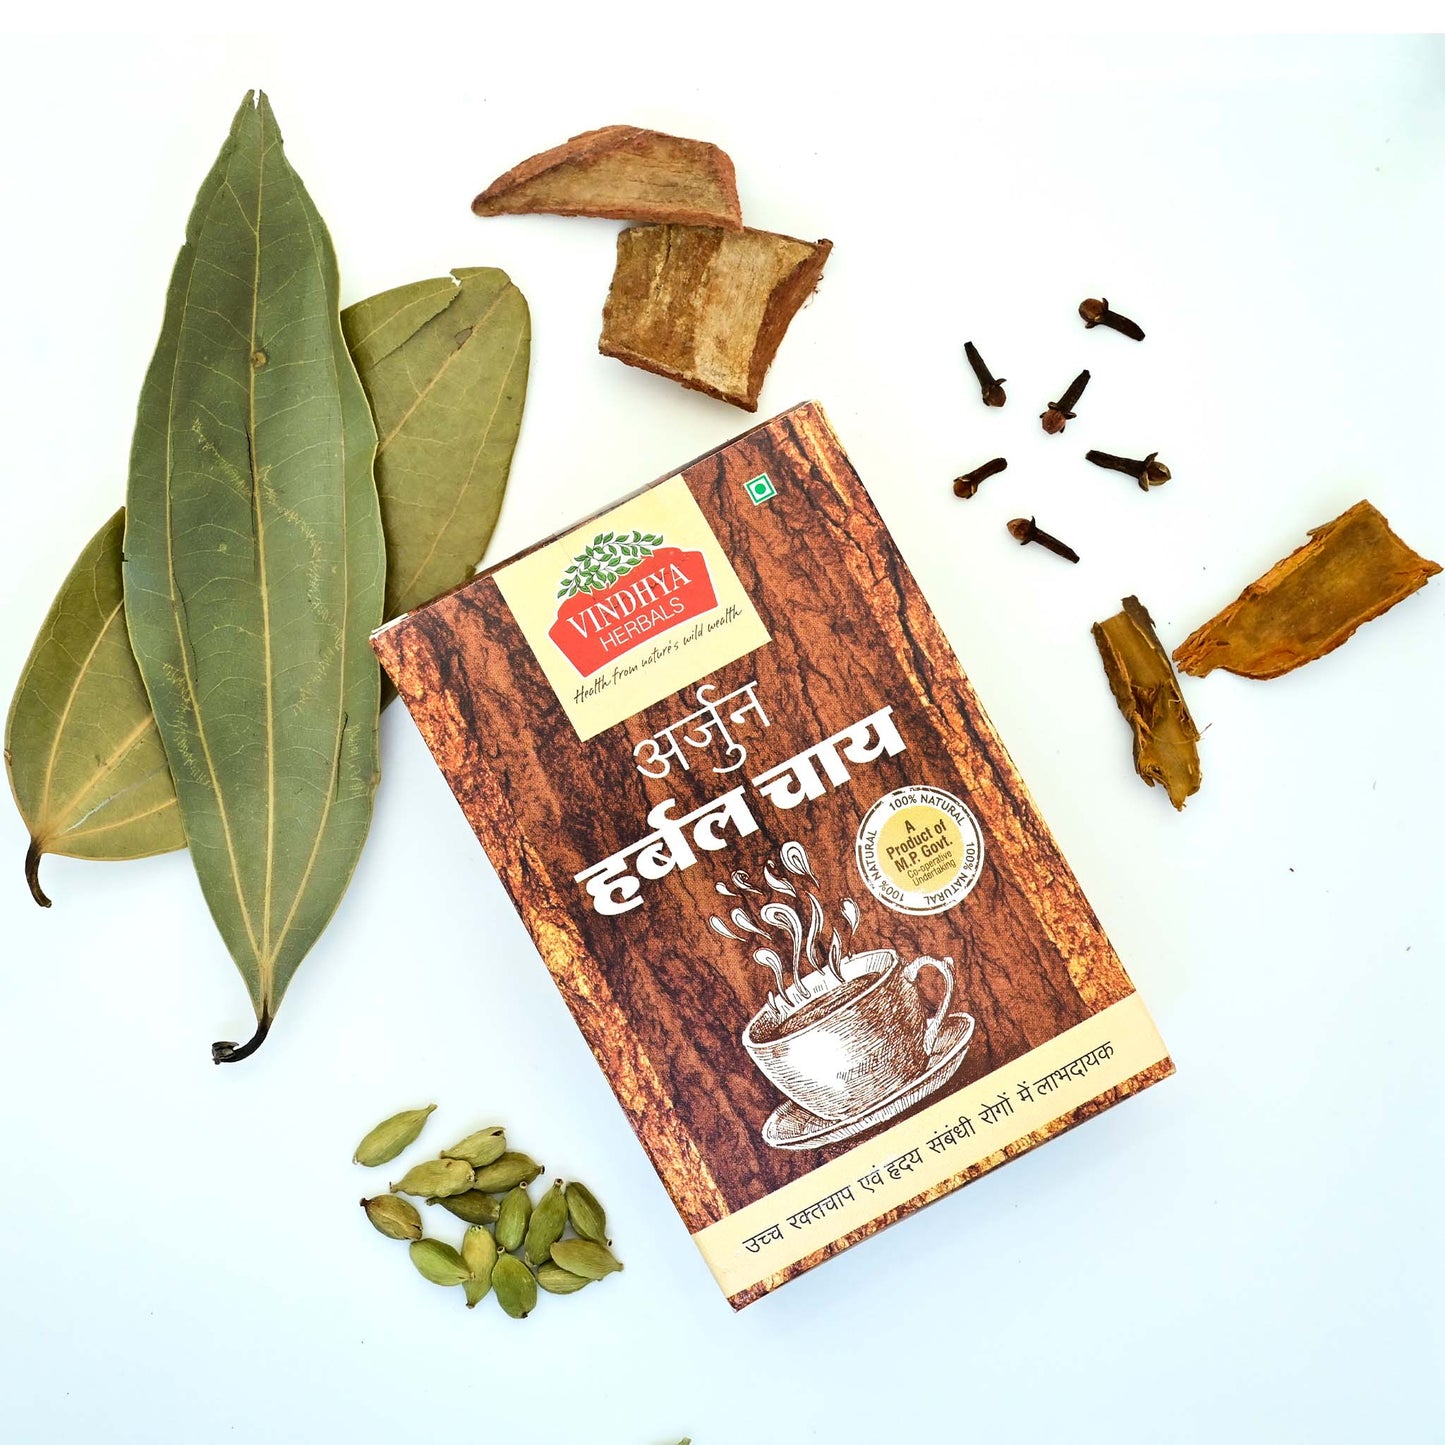 Arjun Herbal Tea - Nourish Your Heart Naturally